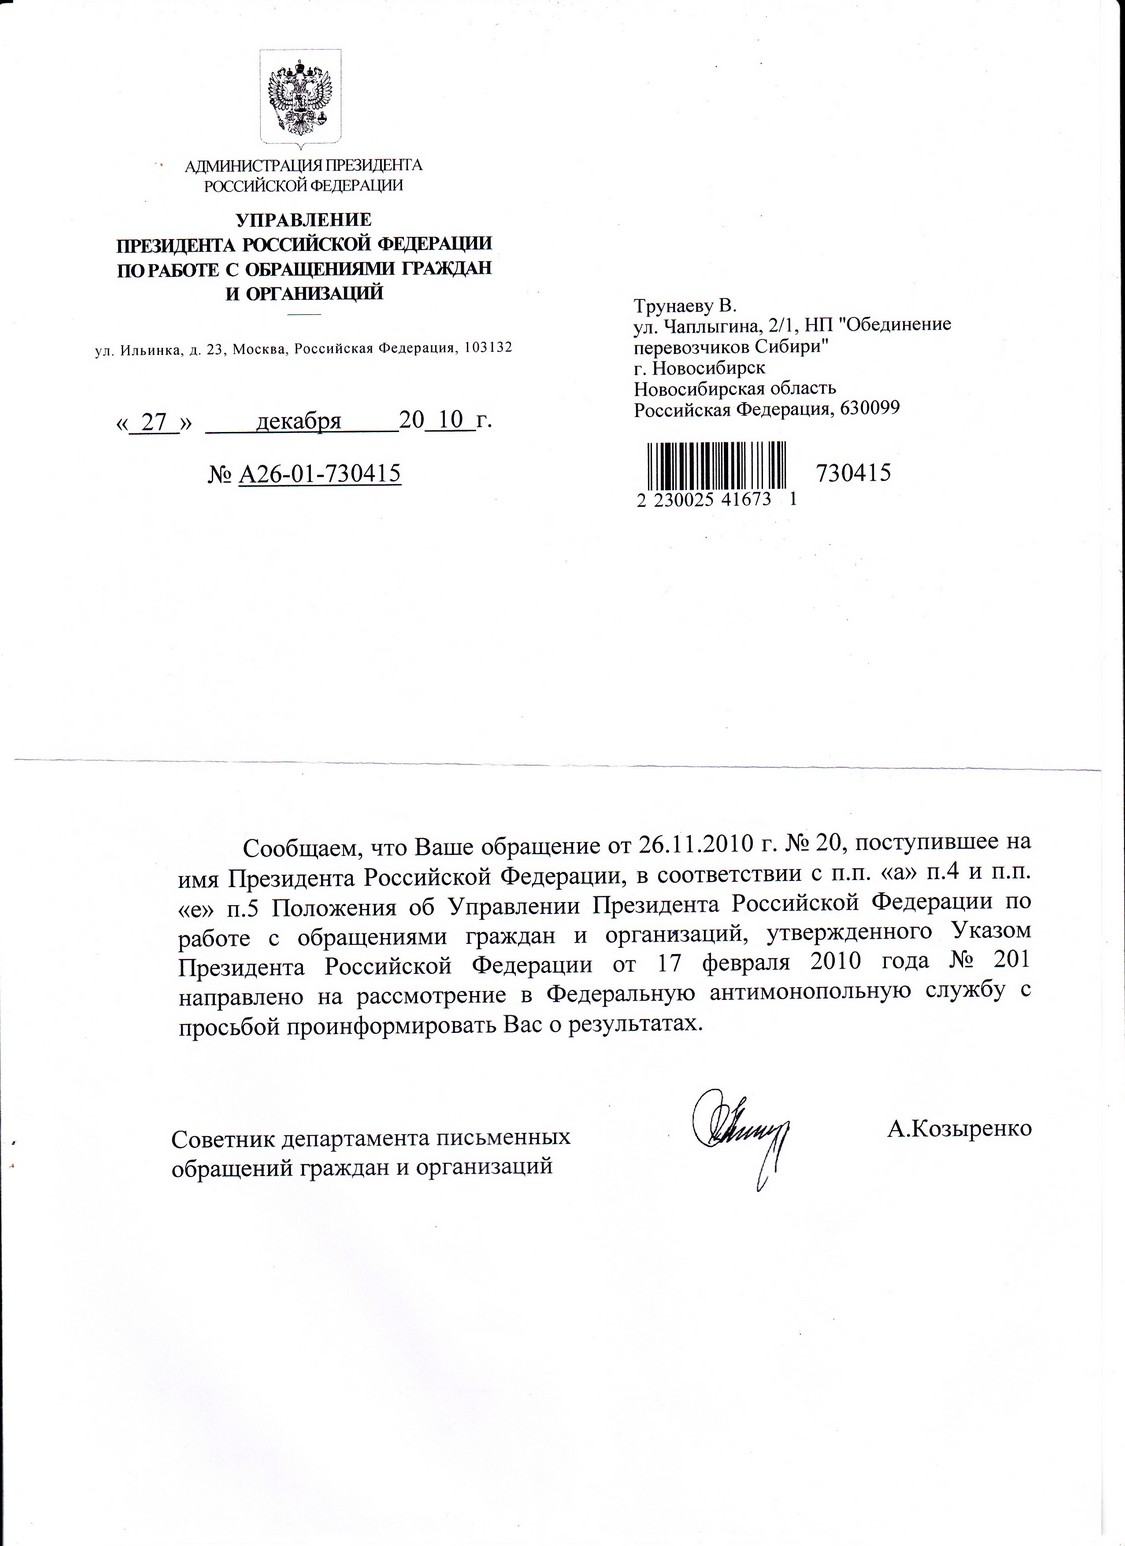 Ответ администрации Президента РФ на наше обращение по поводу резкого повышения цен на ДТ